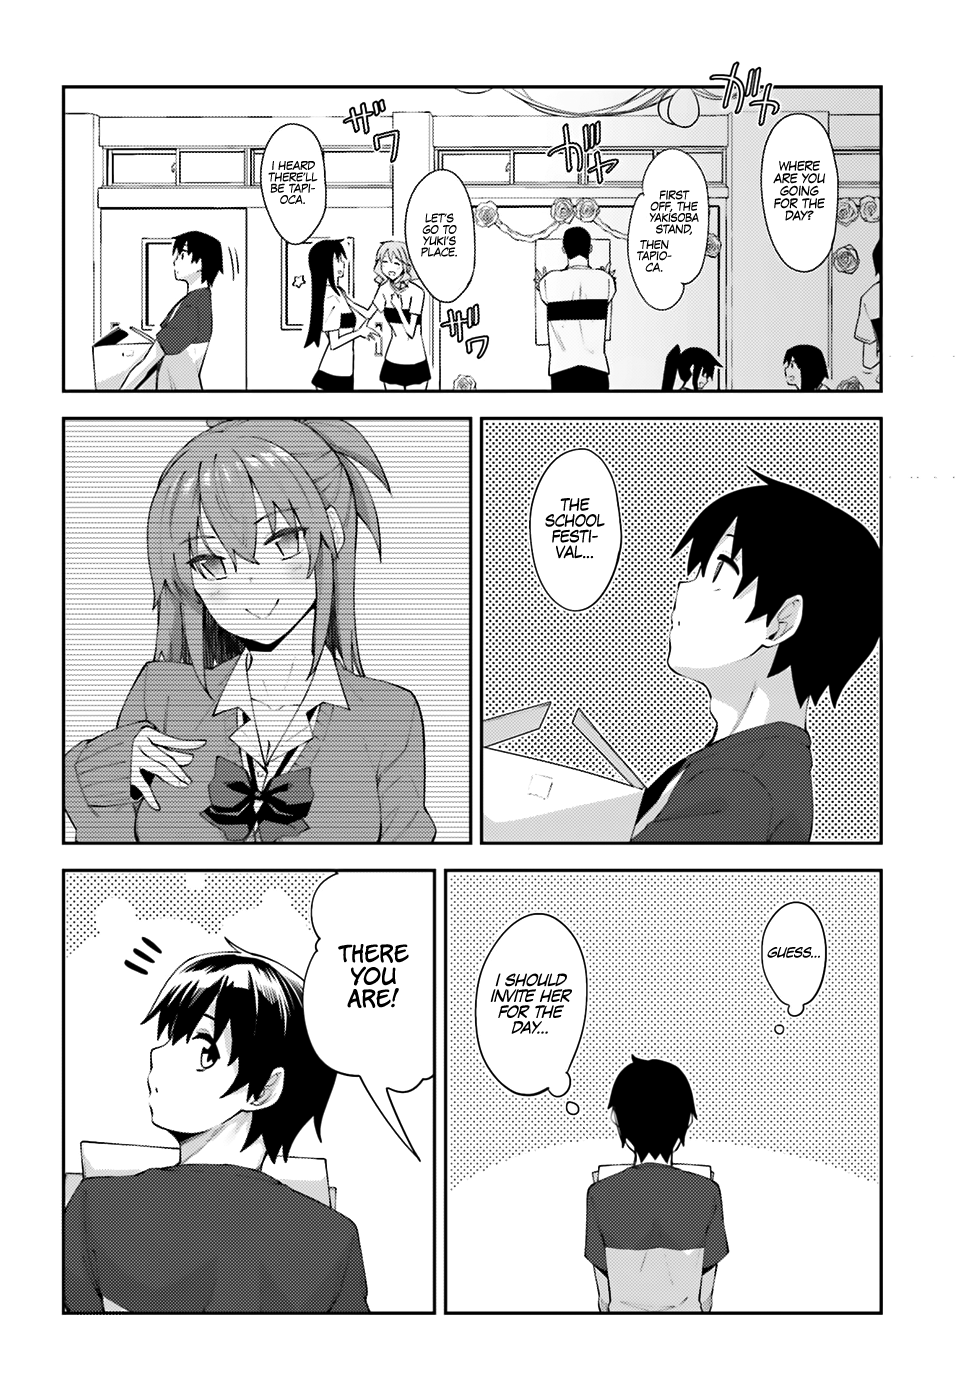 Sakurai-San Wants To Be Noticed - Page 3